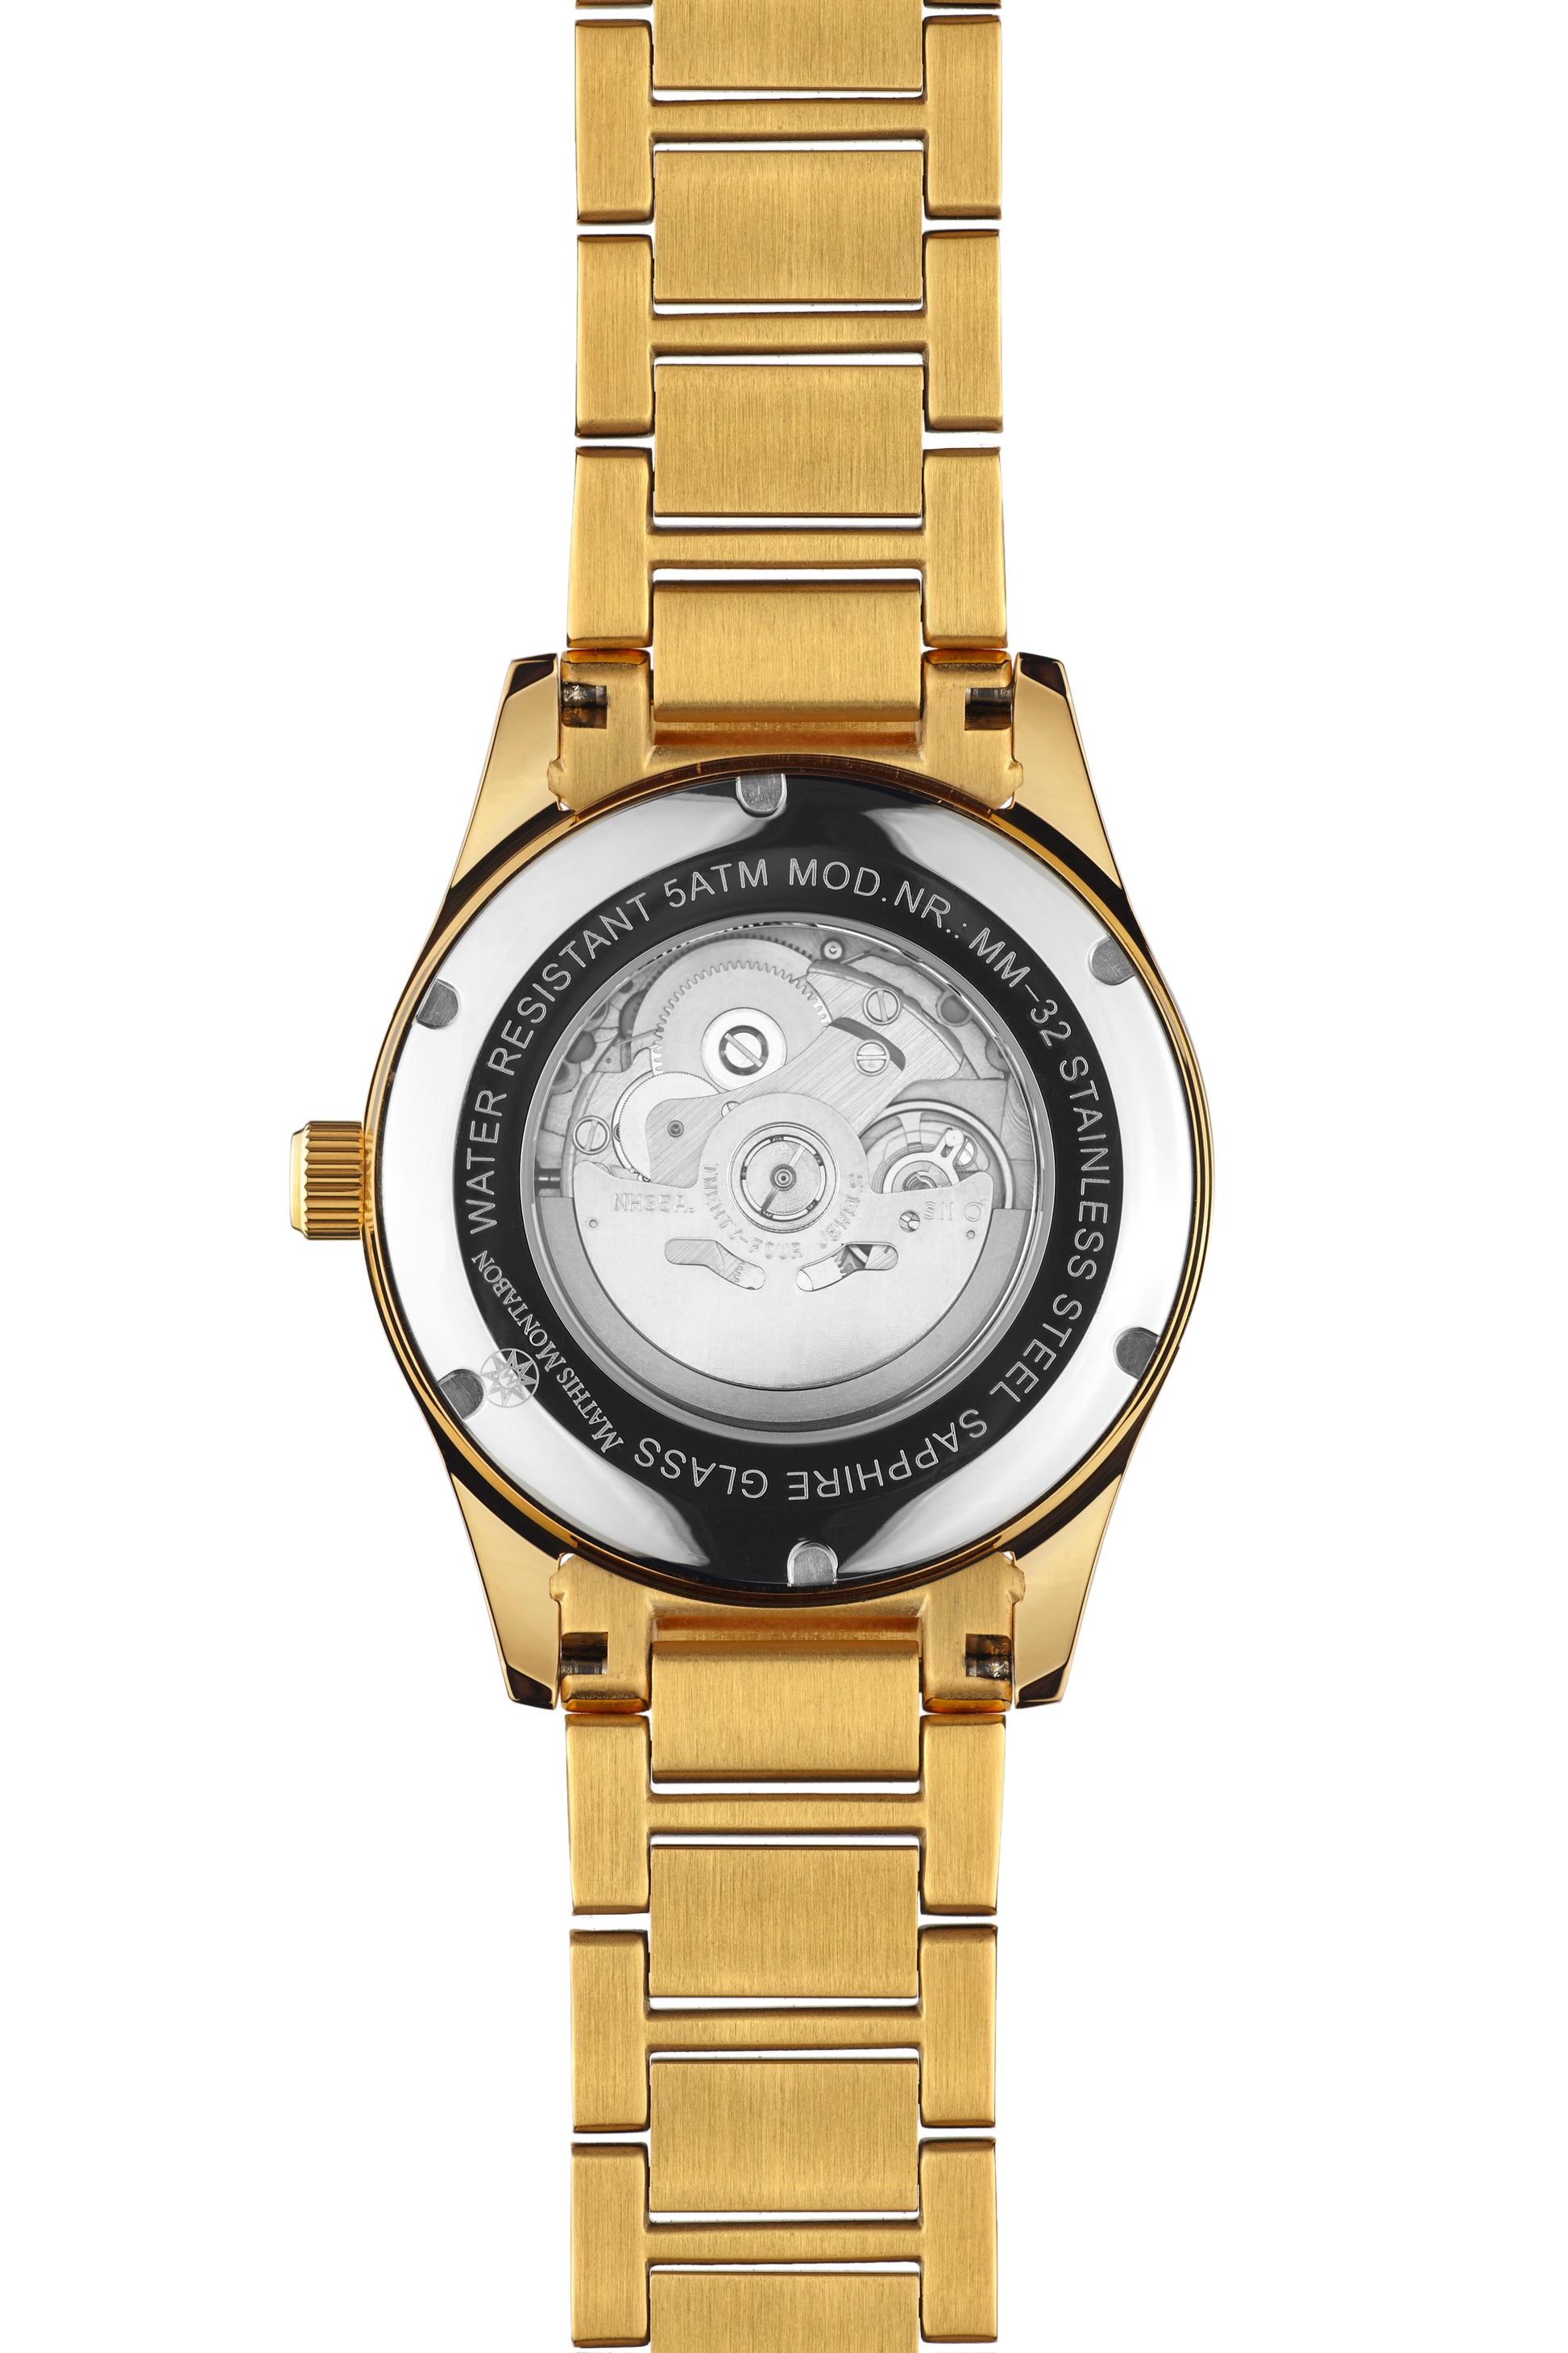 Automatic watches — Héritage — Mathis Montabon — gold black